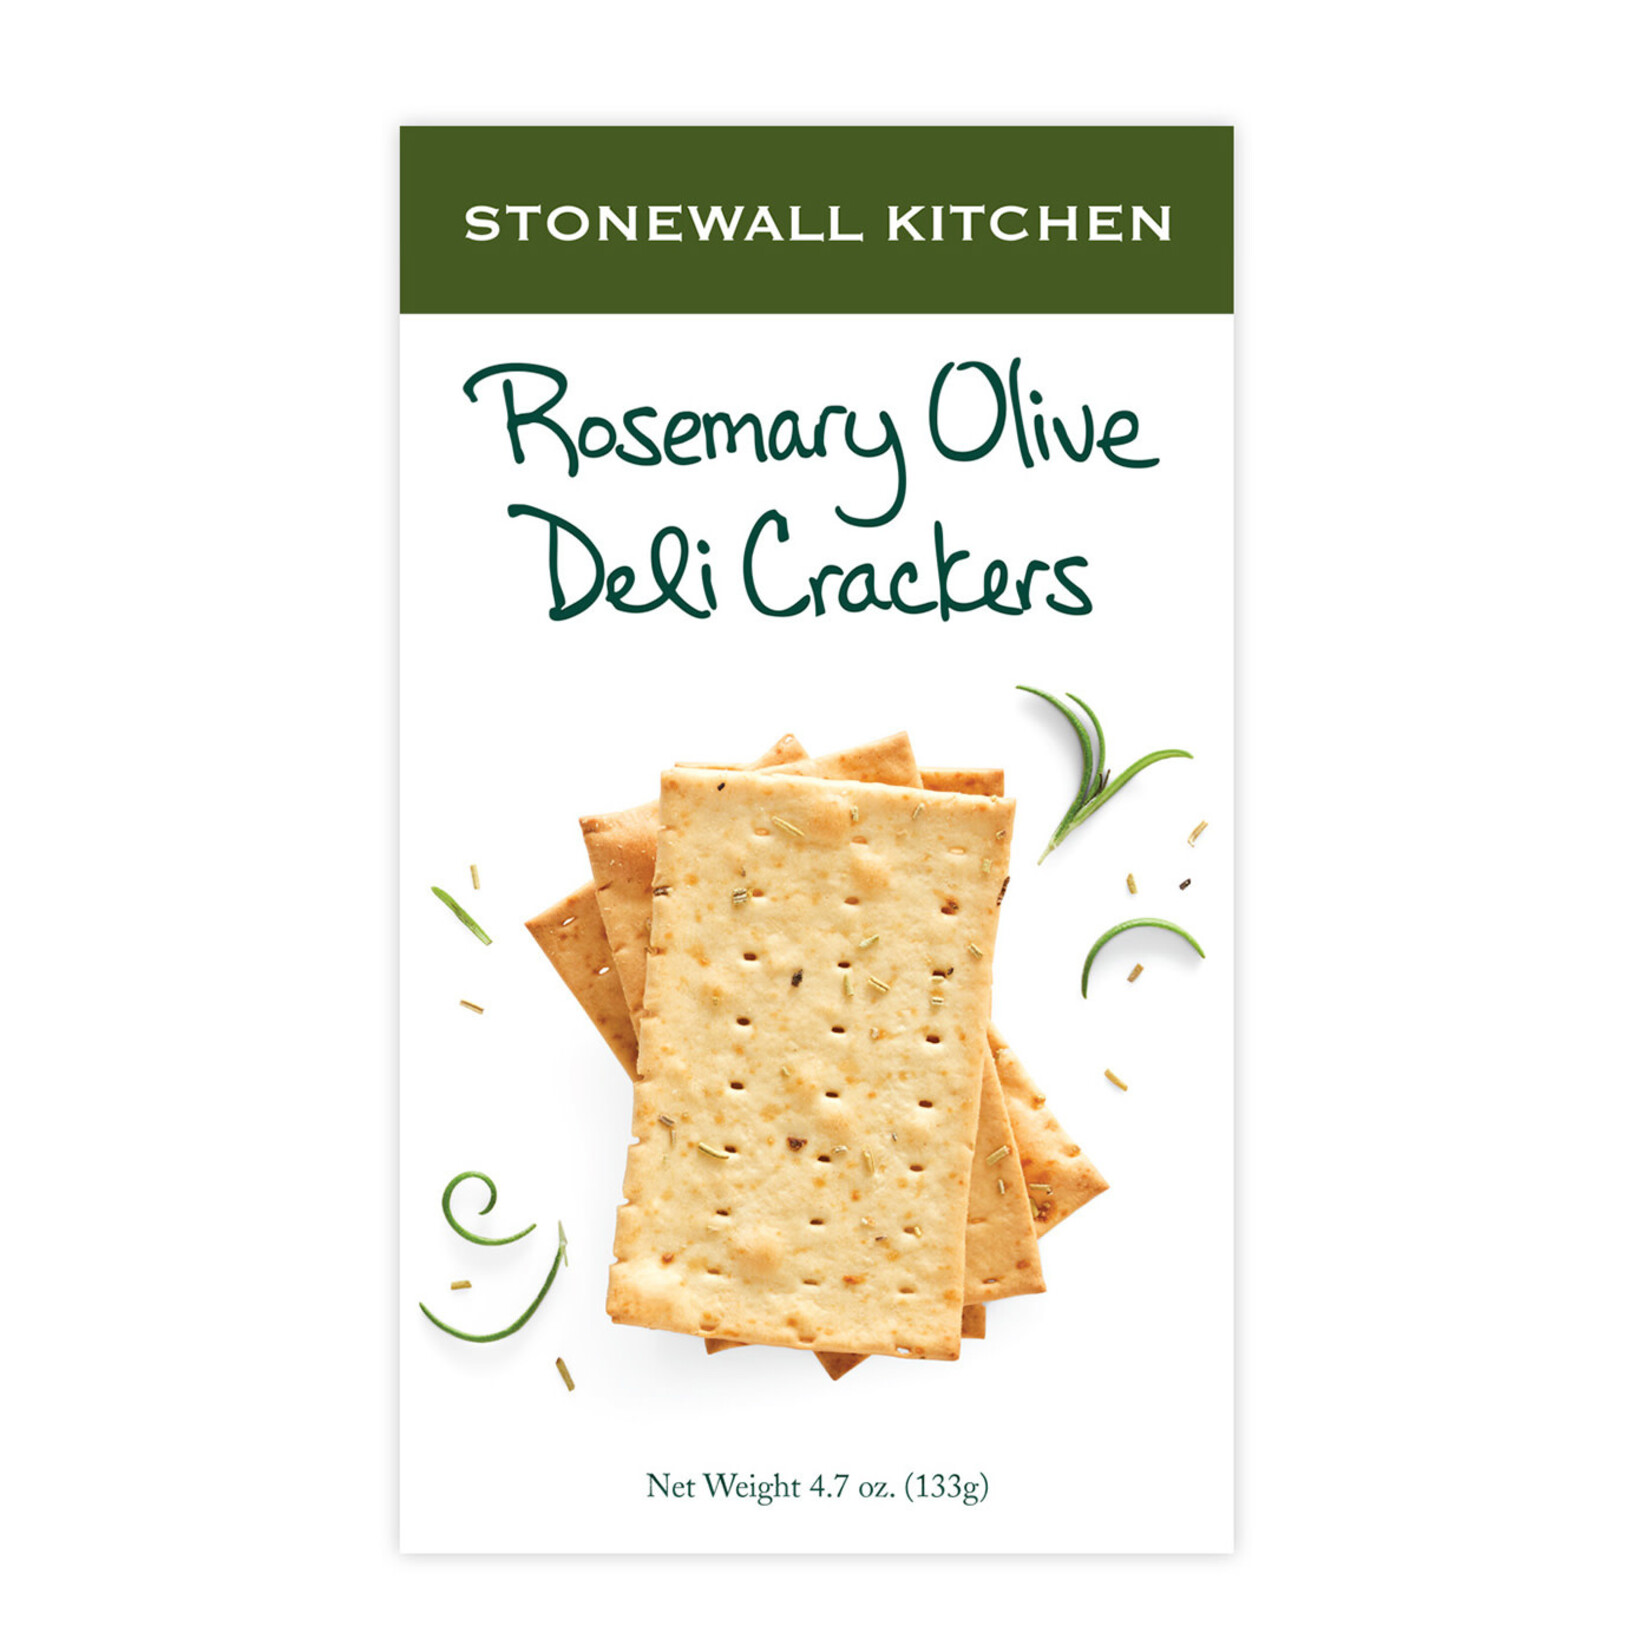 Stonewall Kitchen Rosemary Olive Deli Crackers